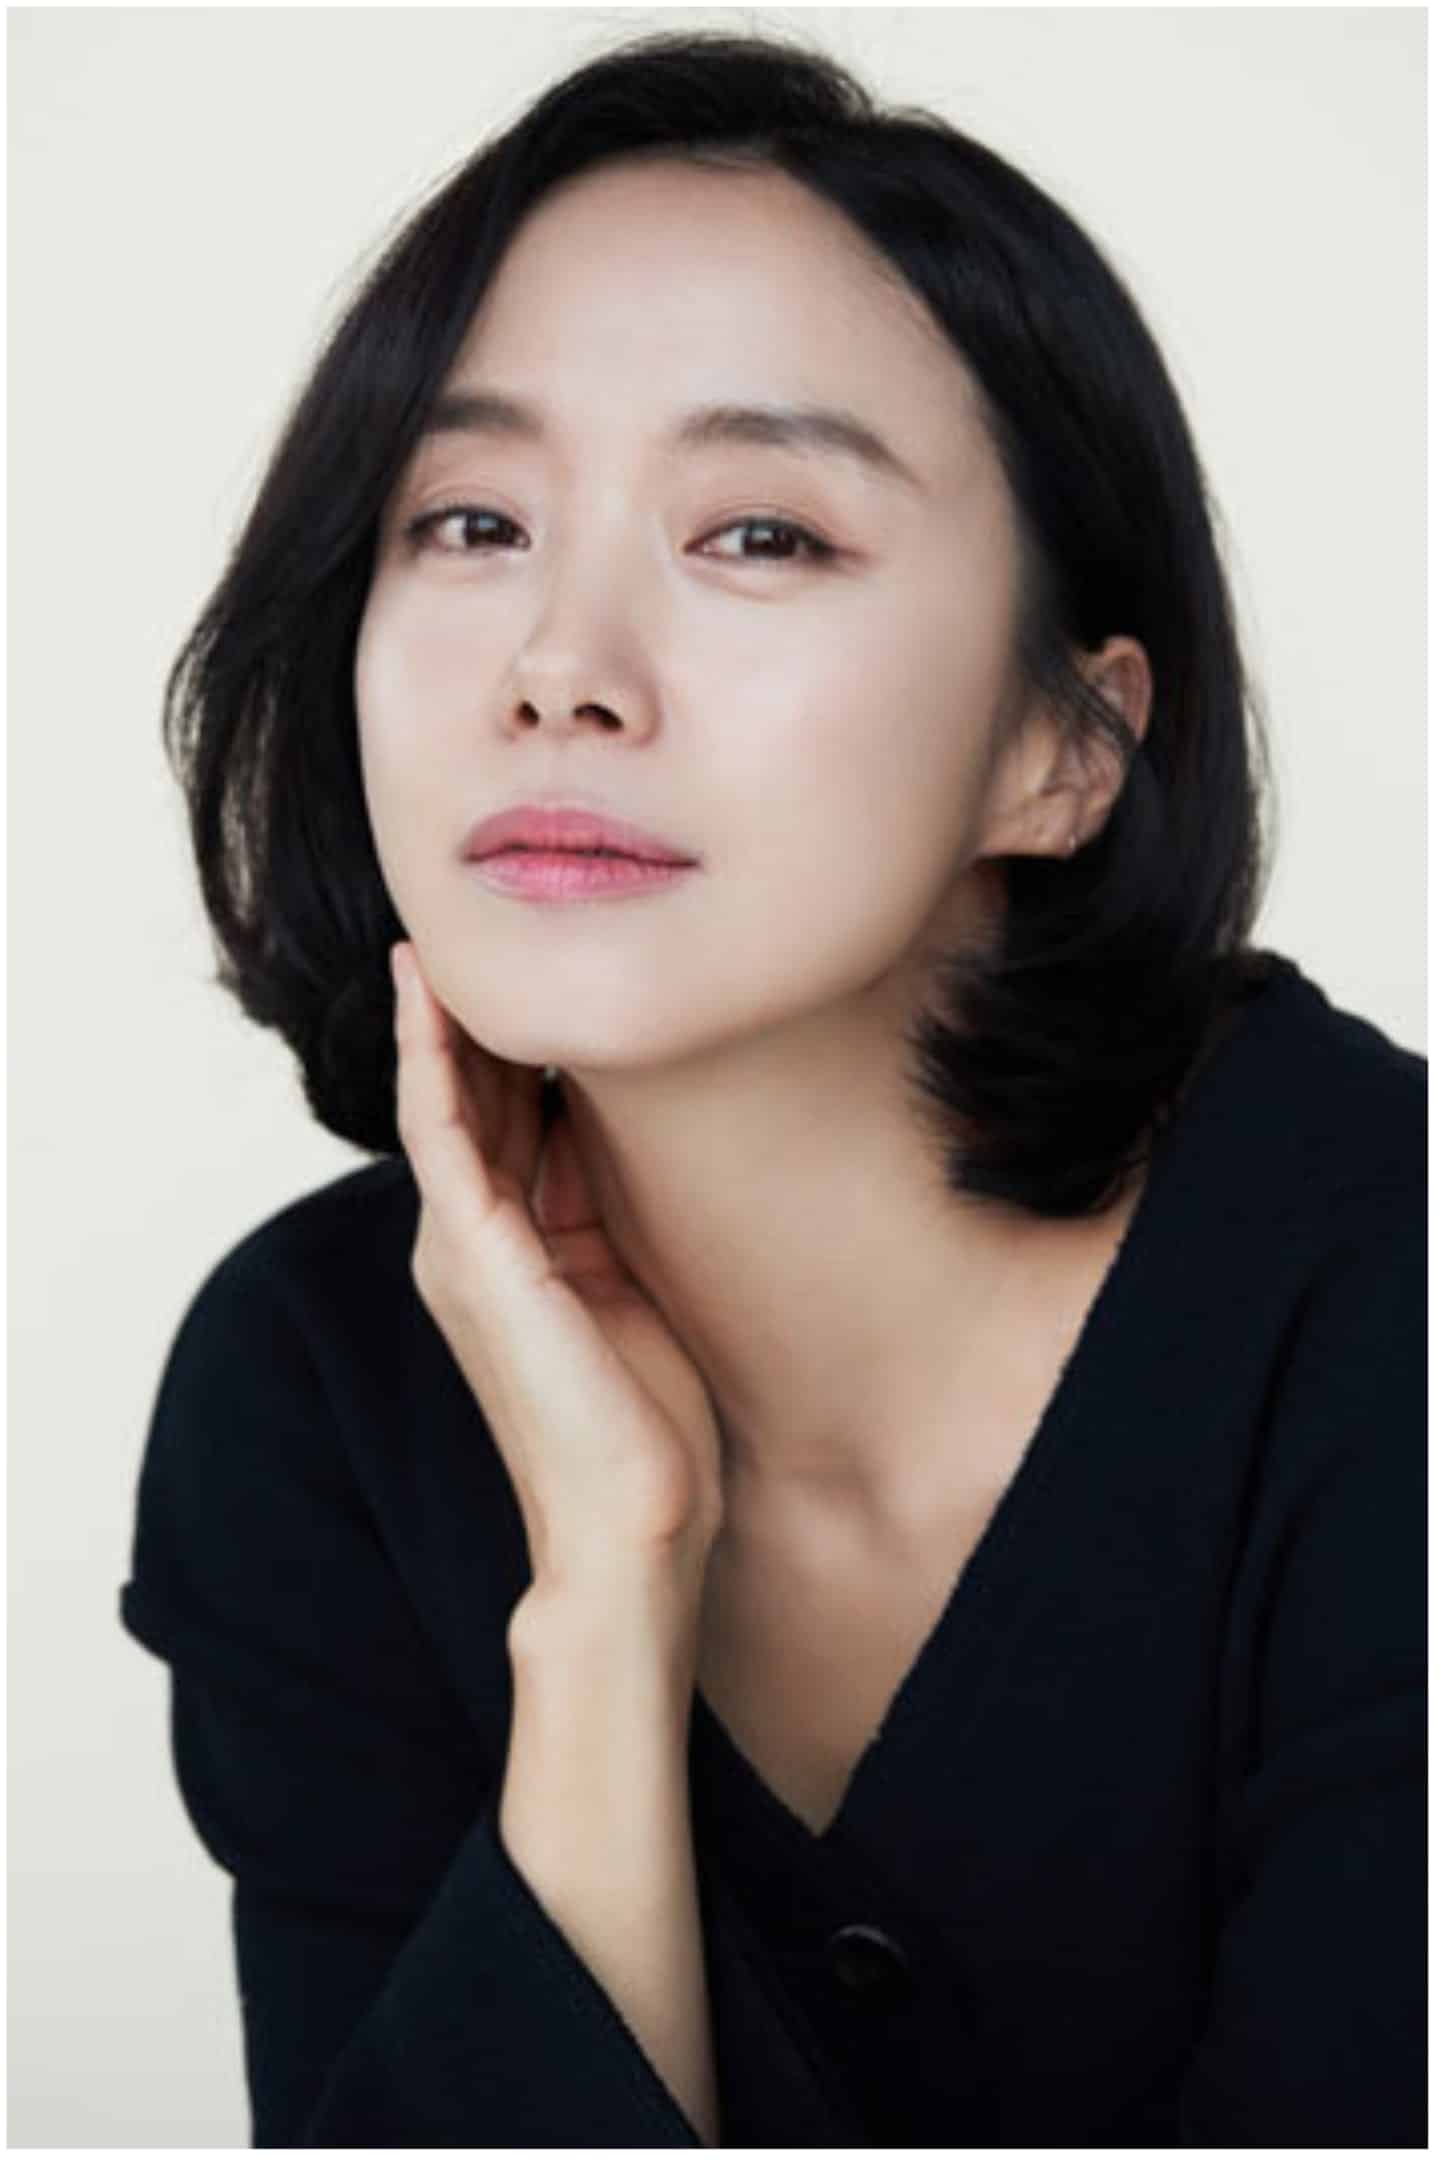 Crash Course in Romance K-drama actress Jeon Do-yeon